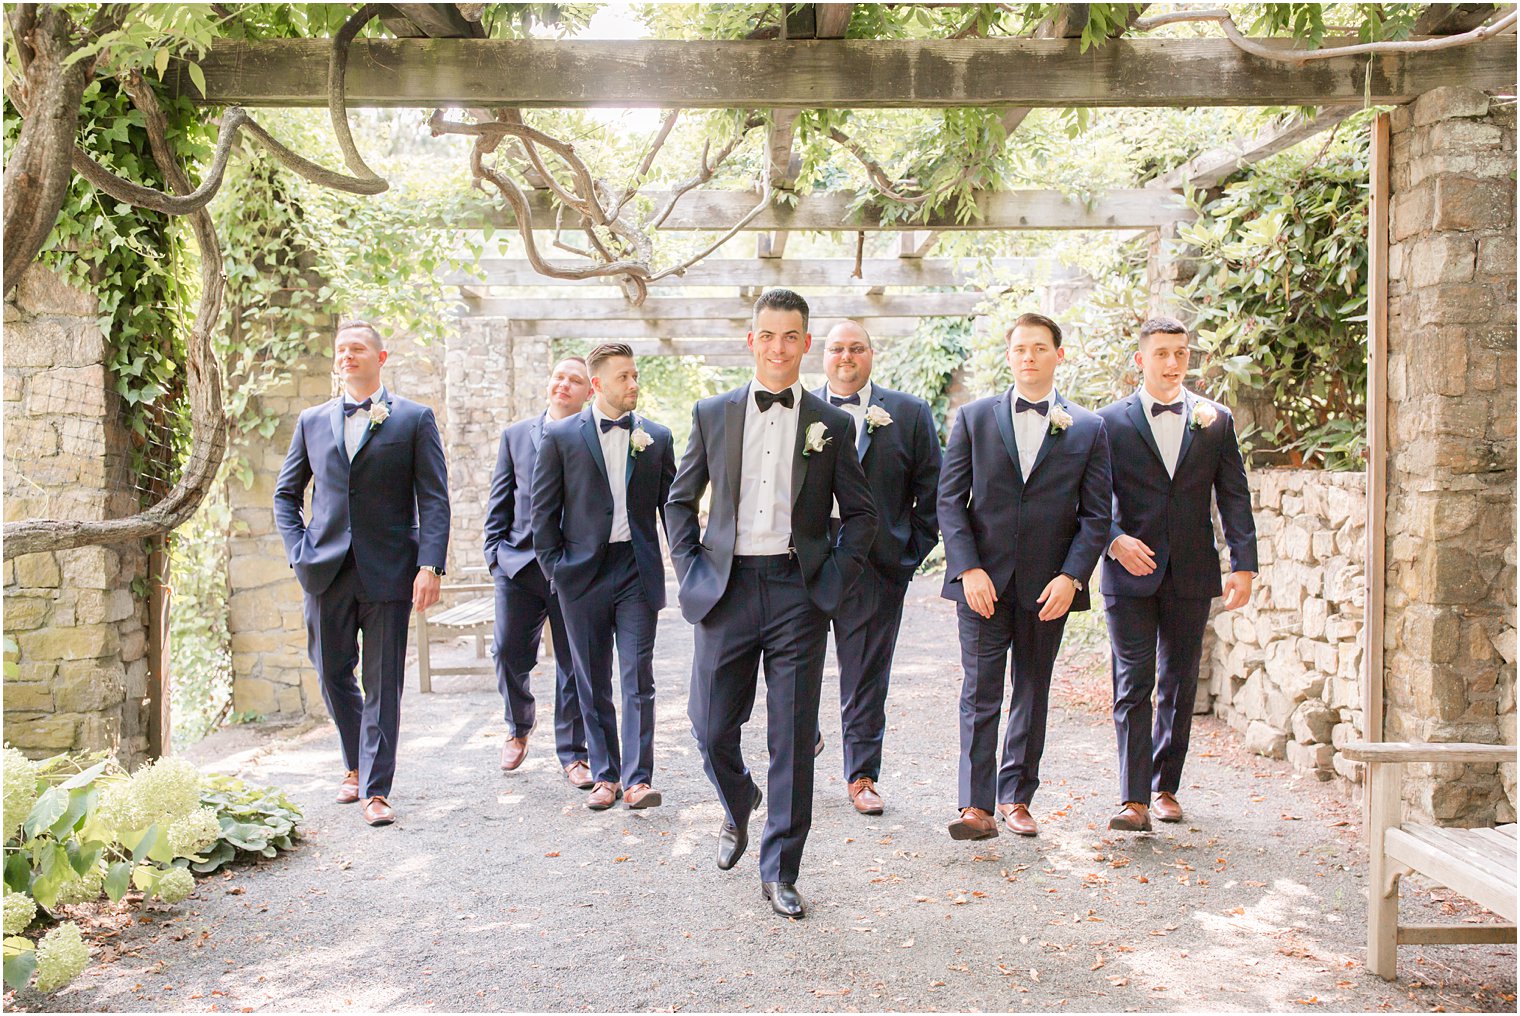 Groom and groomsmen candid photo